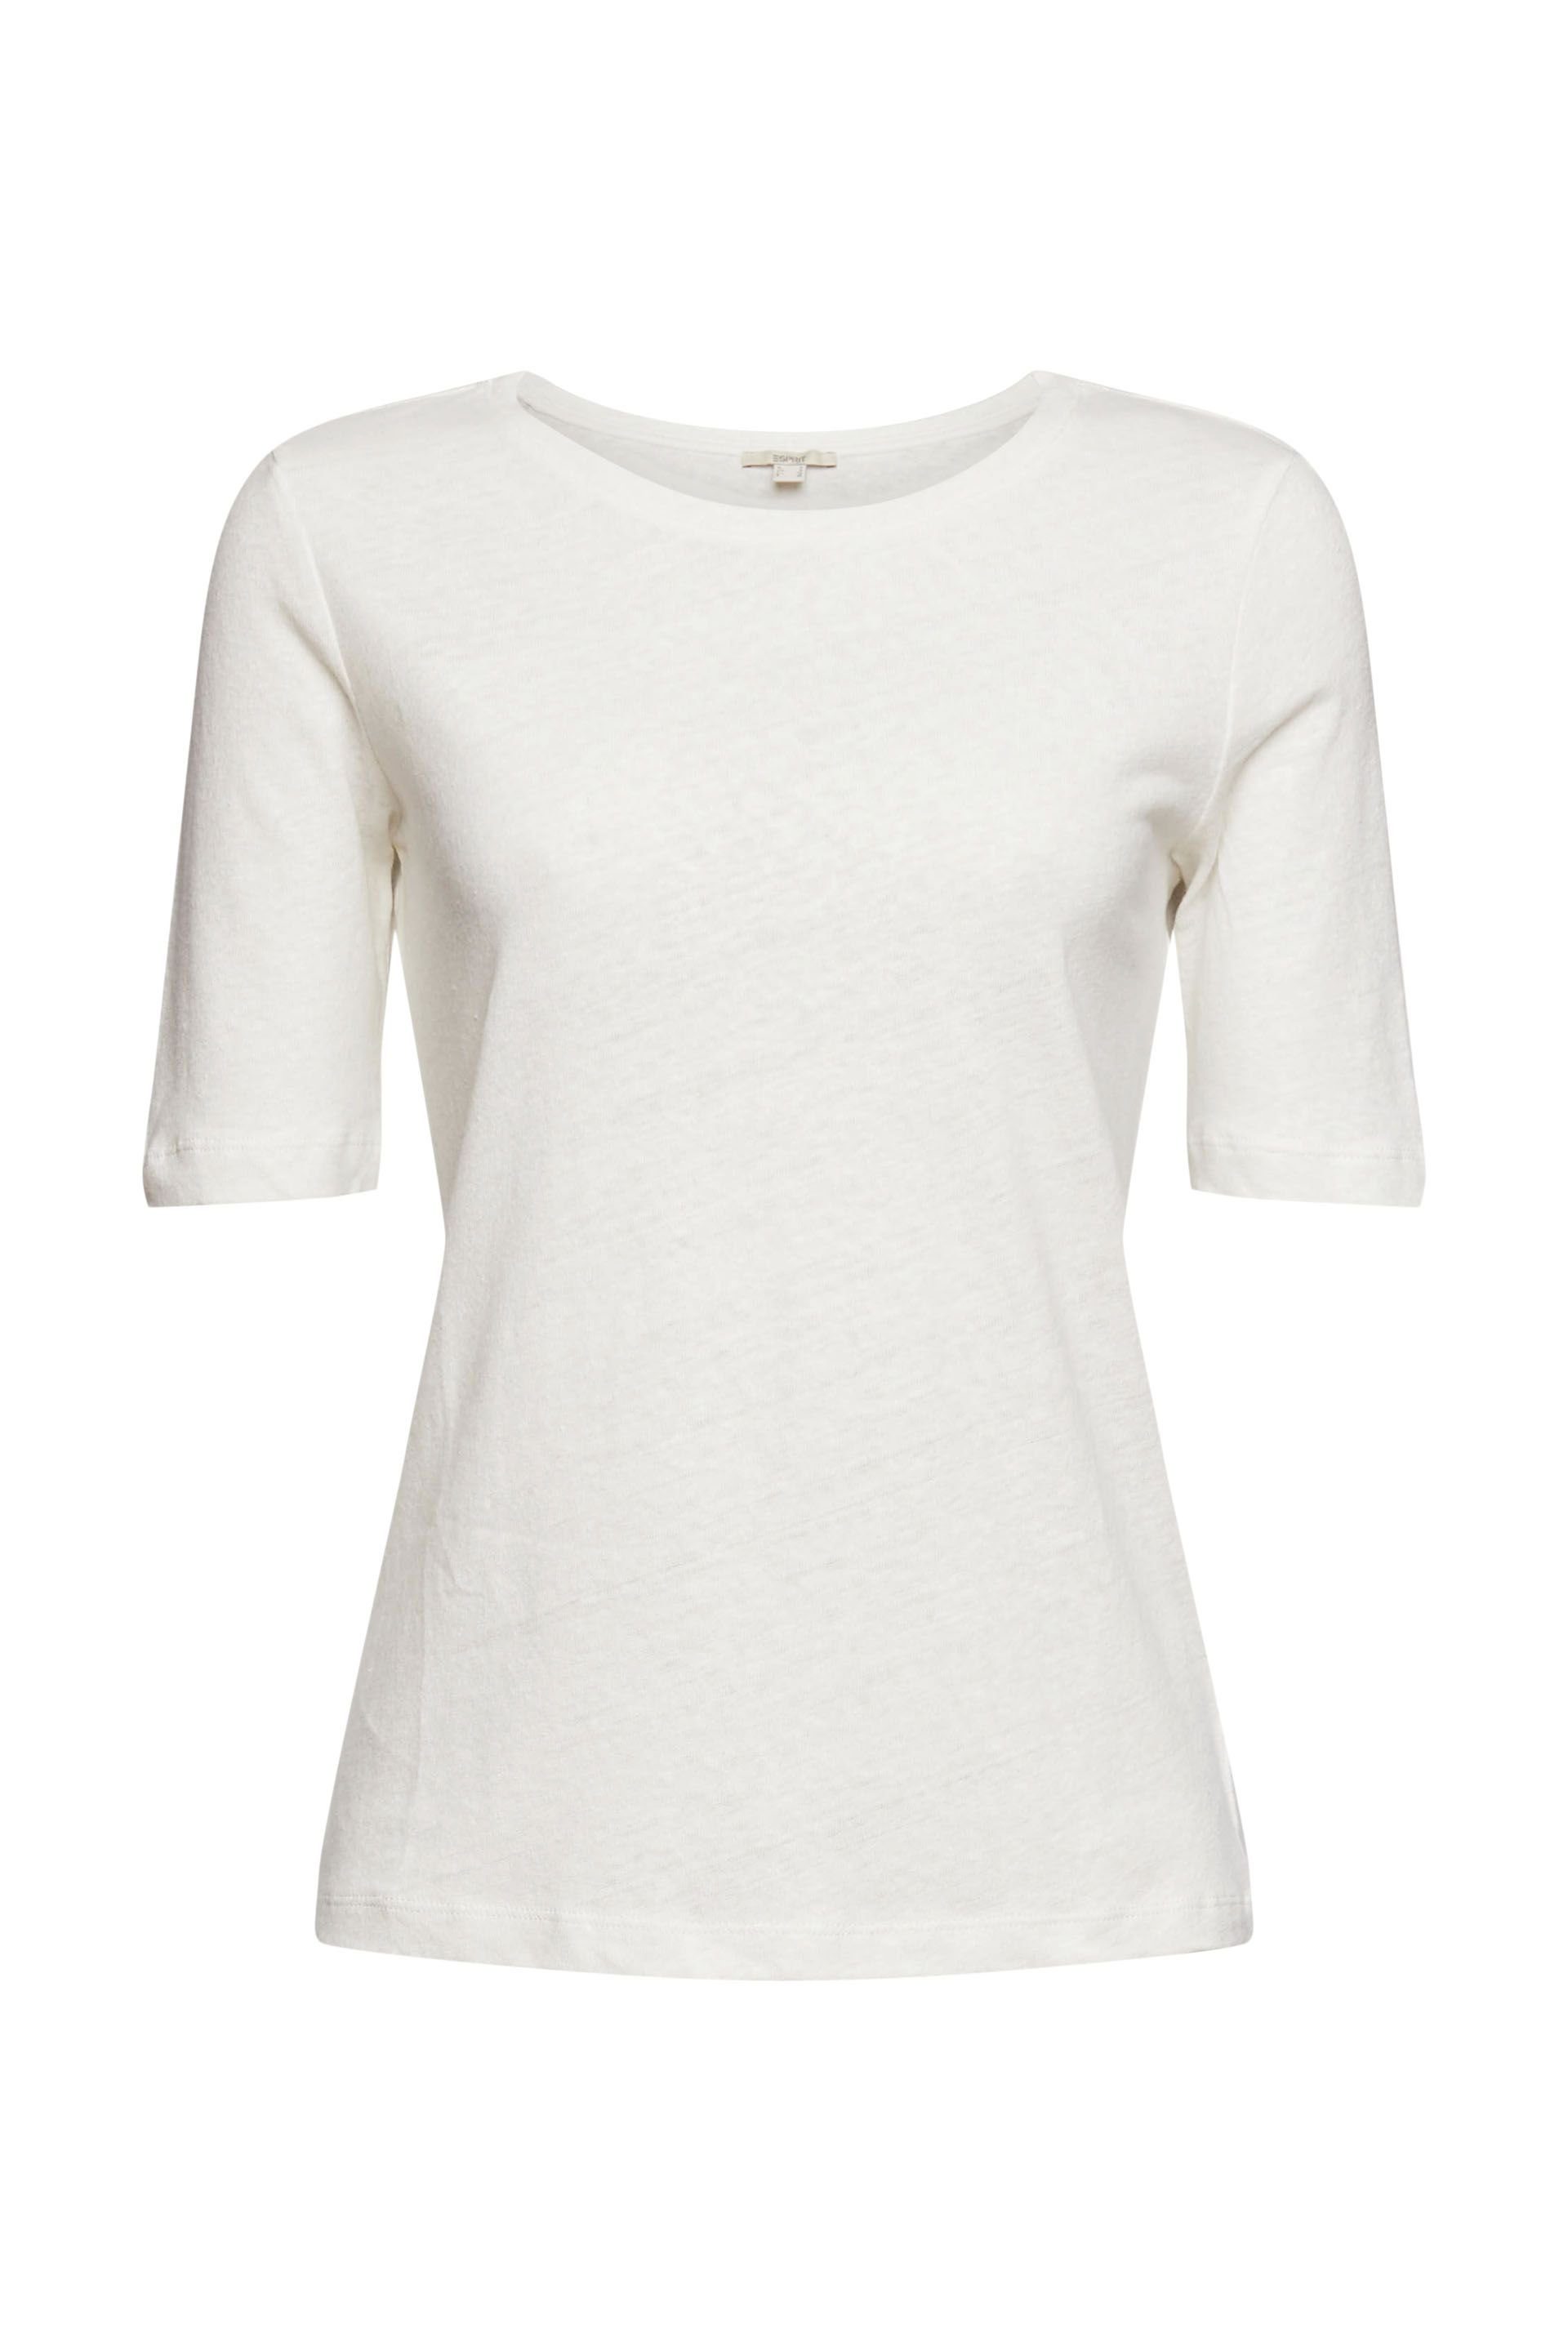 Esprit T-Shirt off white